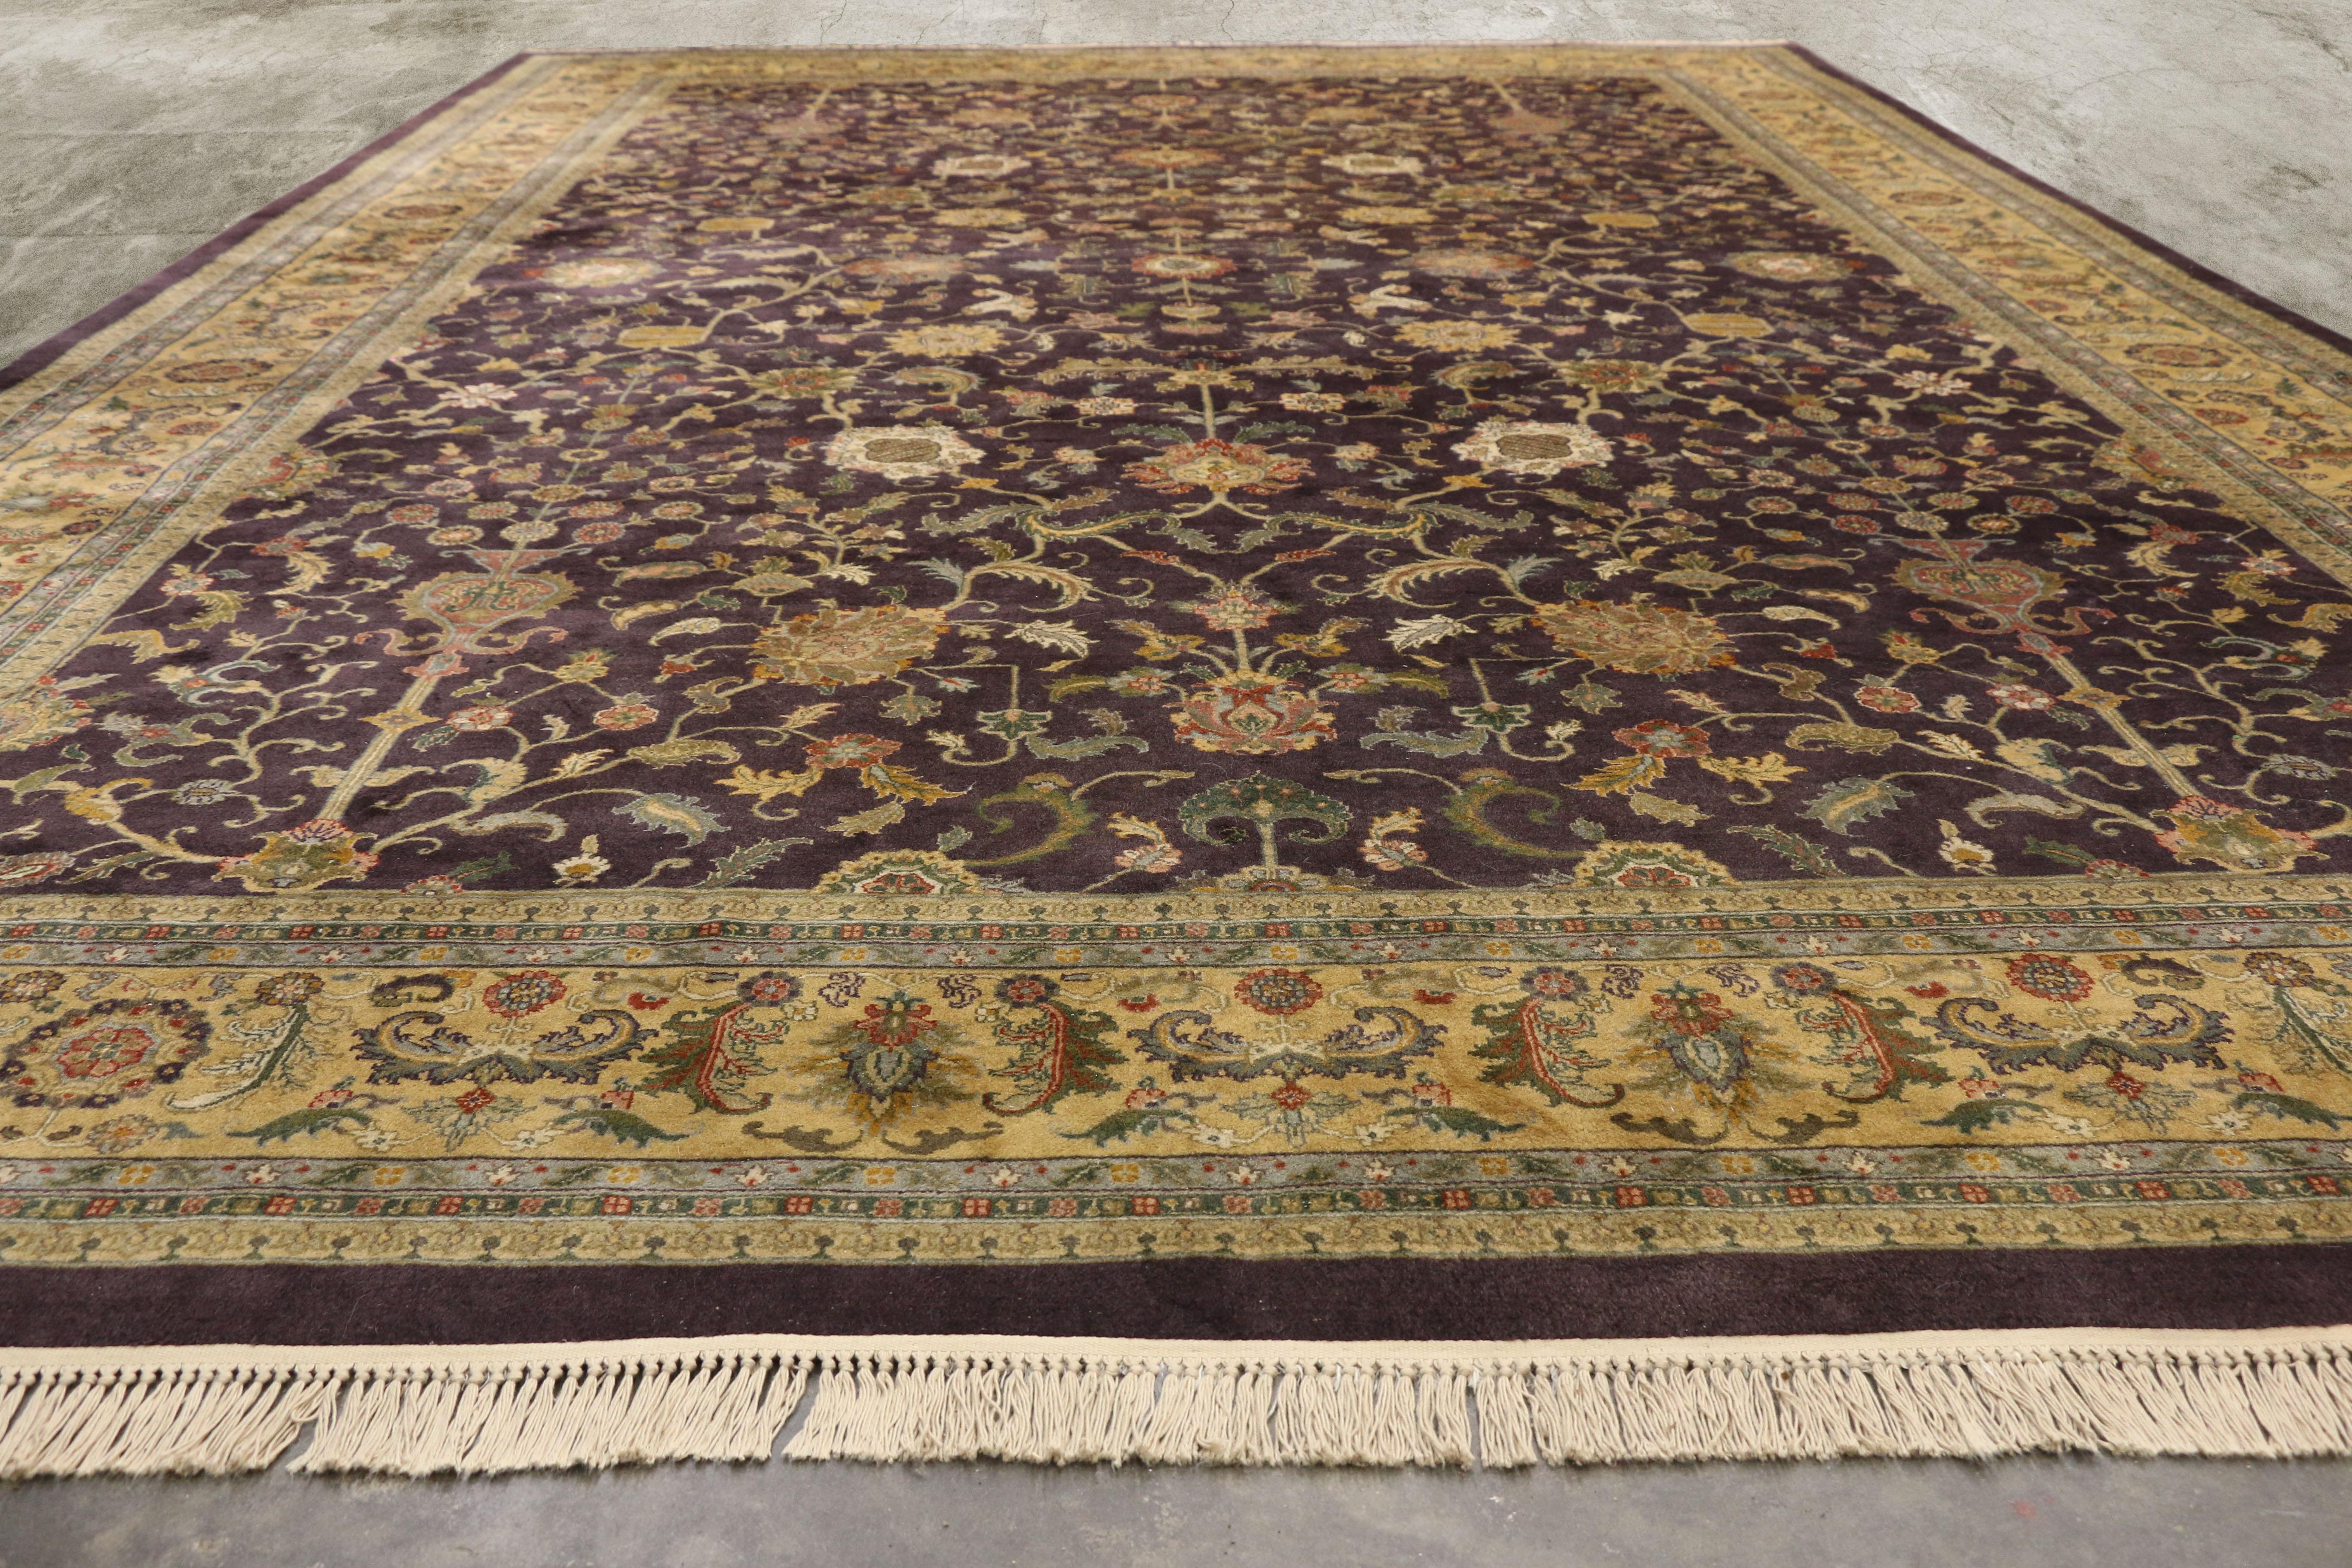 Vintage Aubergine Indian Palatial Carpet, 11'03 x 17'08 For Sale 1